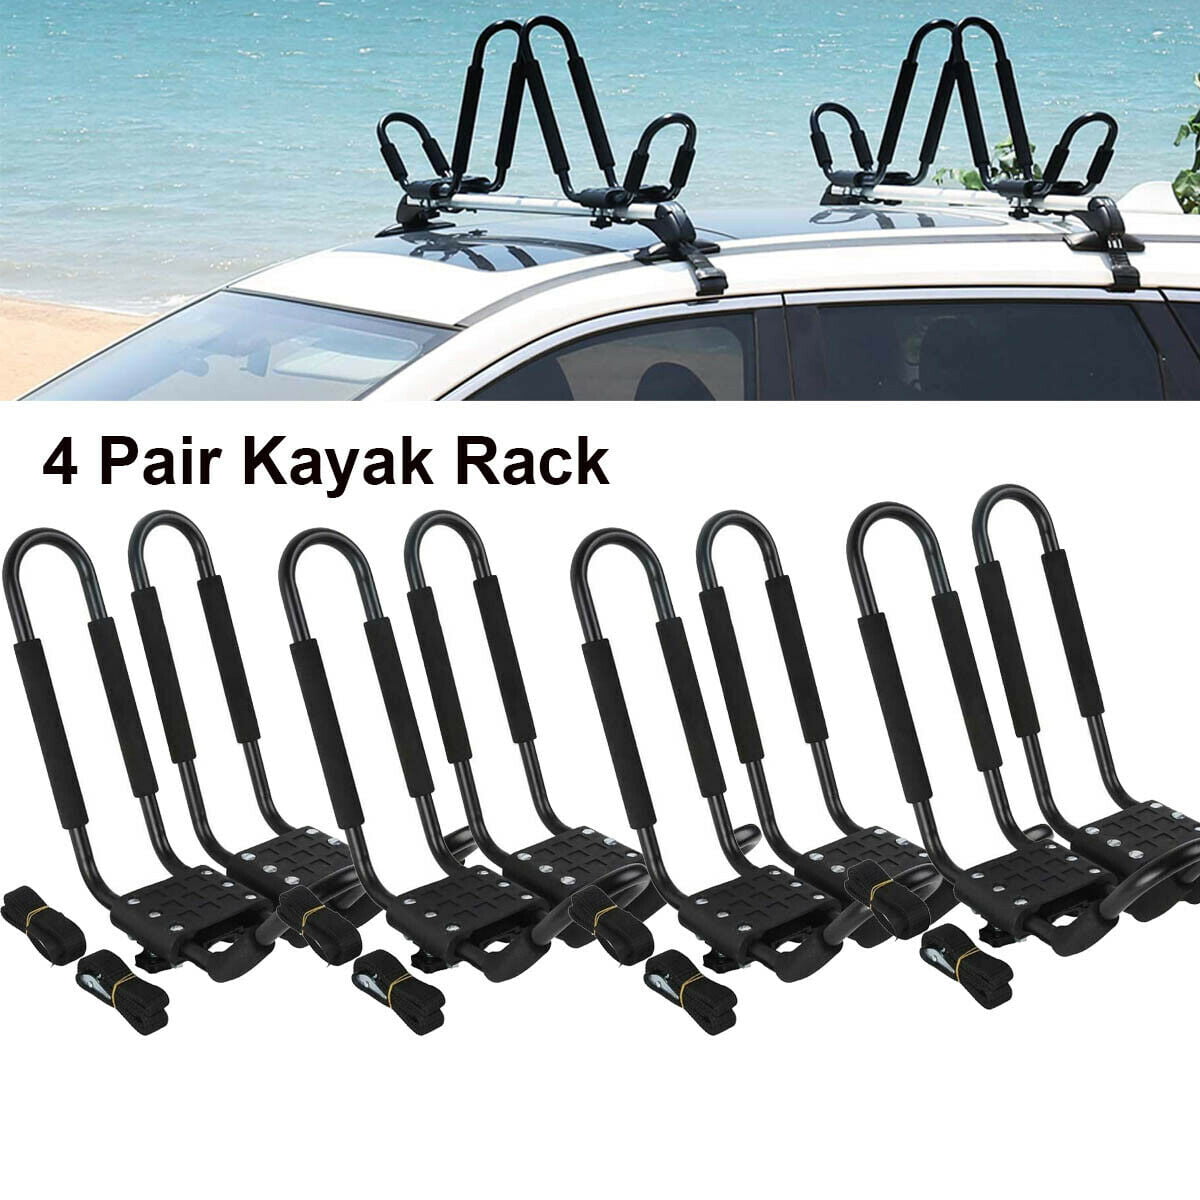 2 pairs Canoe Boat Kayak Roof Rack Car SUV Truck Top Mount Carrier J Cross bar 